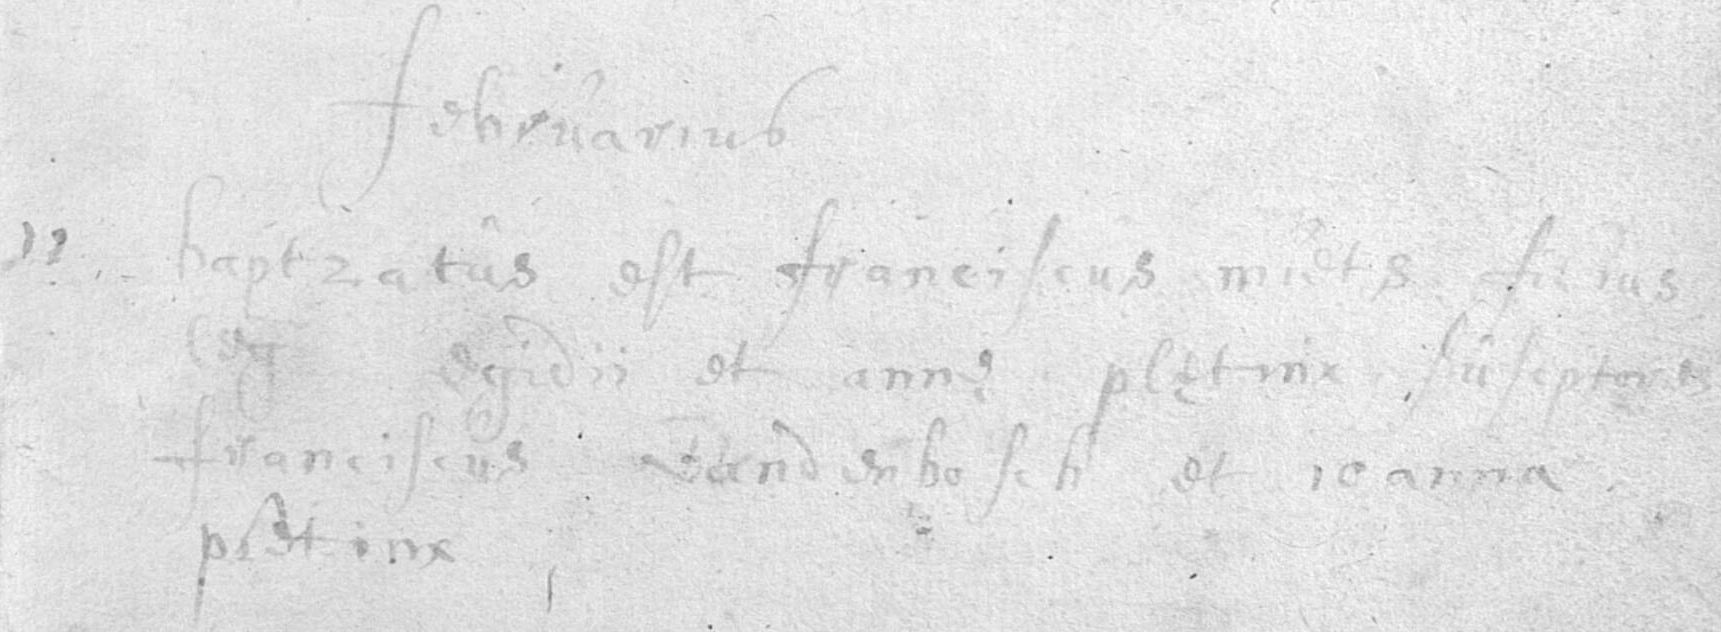 1679-FranciscusMiets11Feb1679EgidiiMietsAnnaPletiinx.jpg